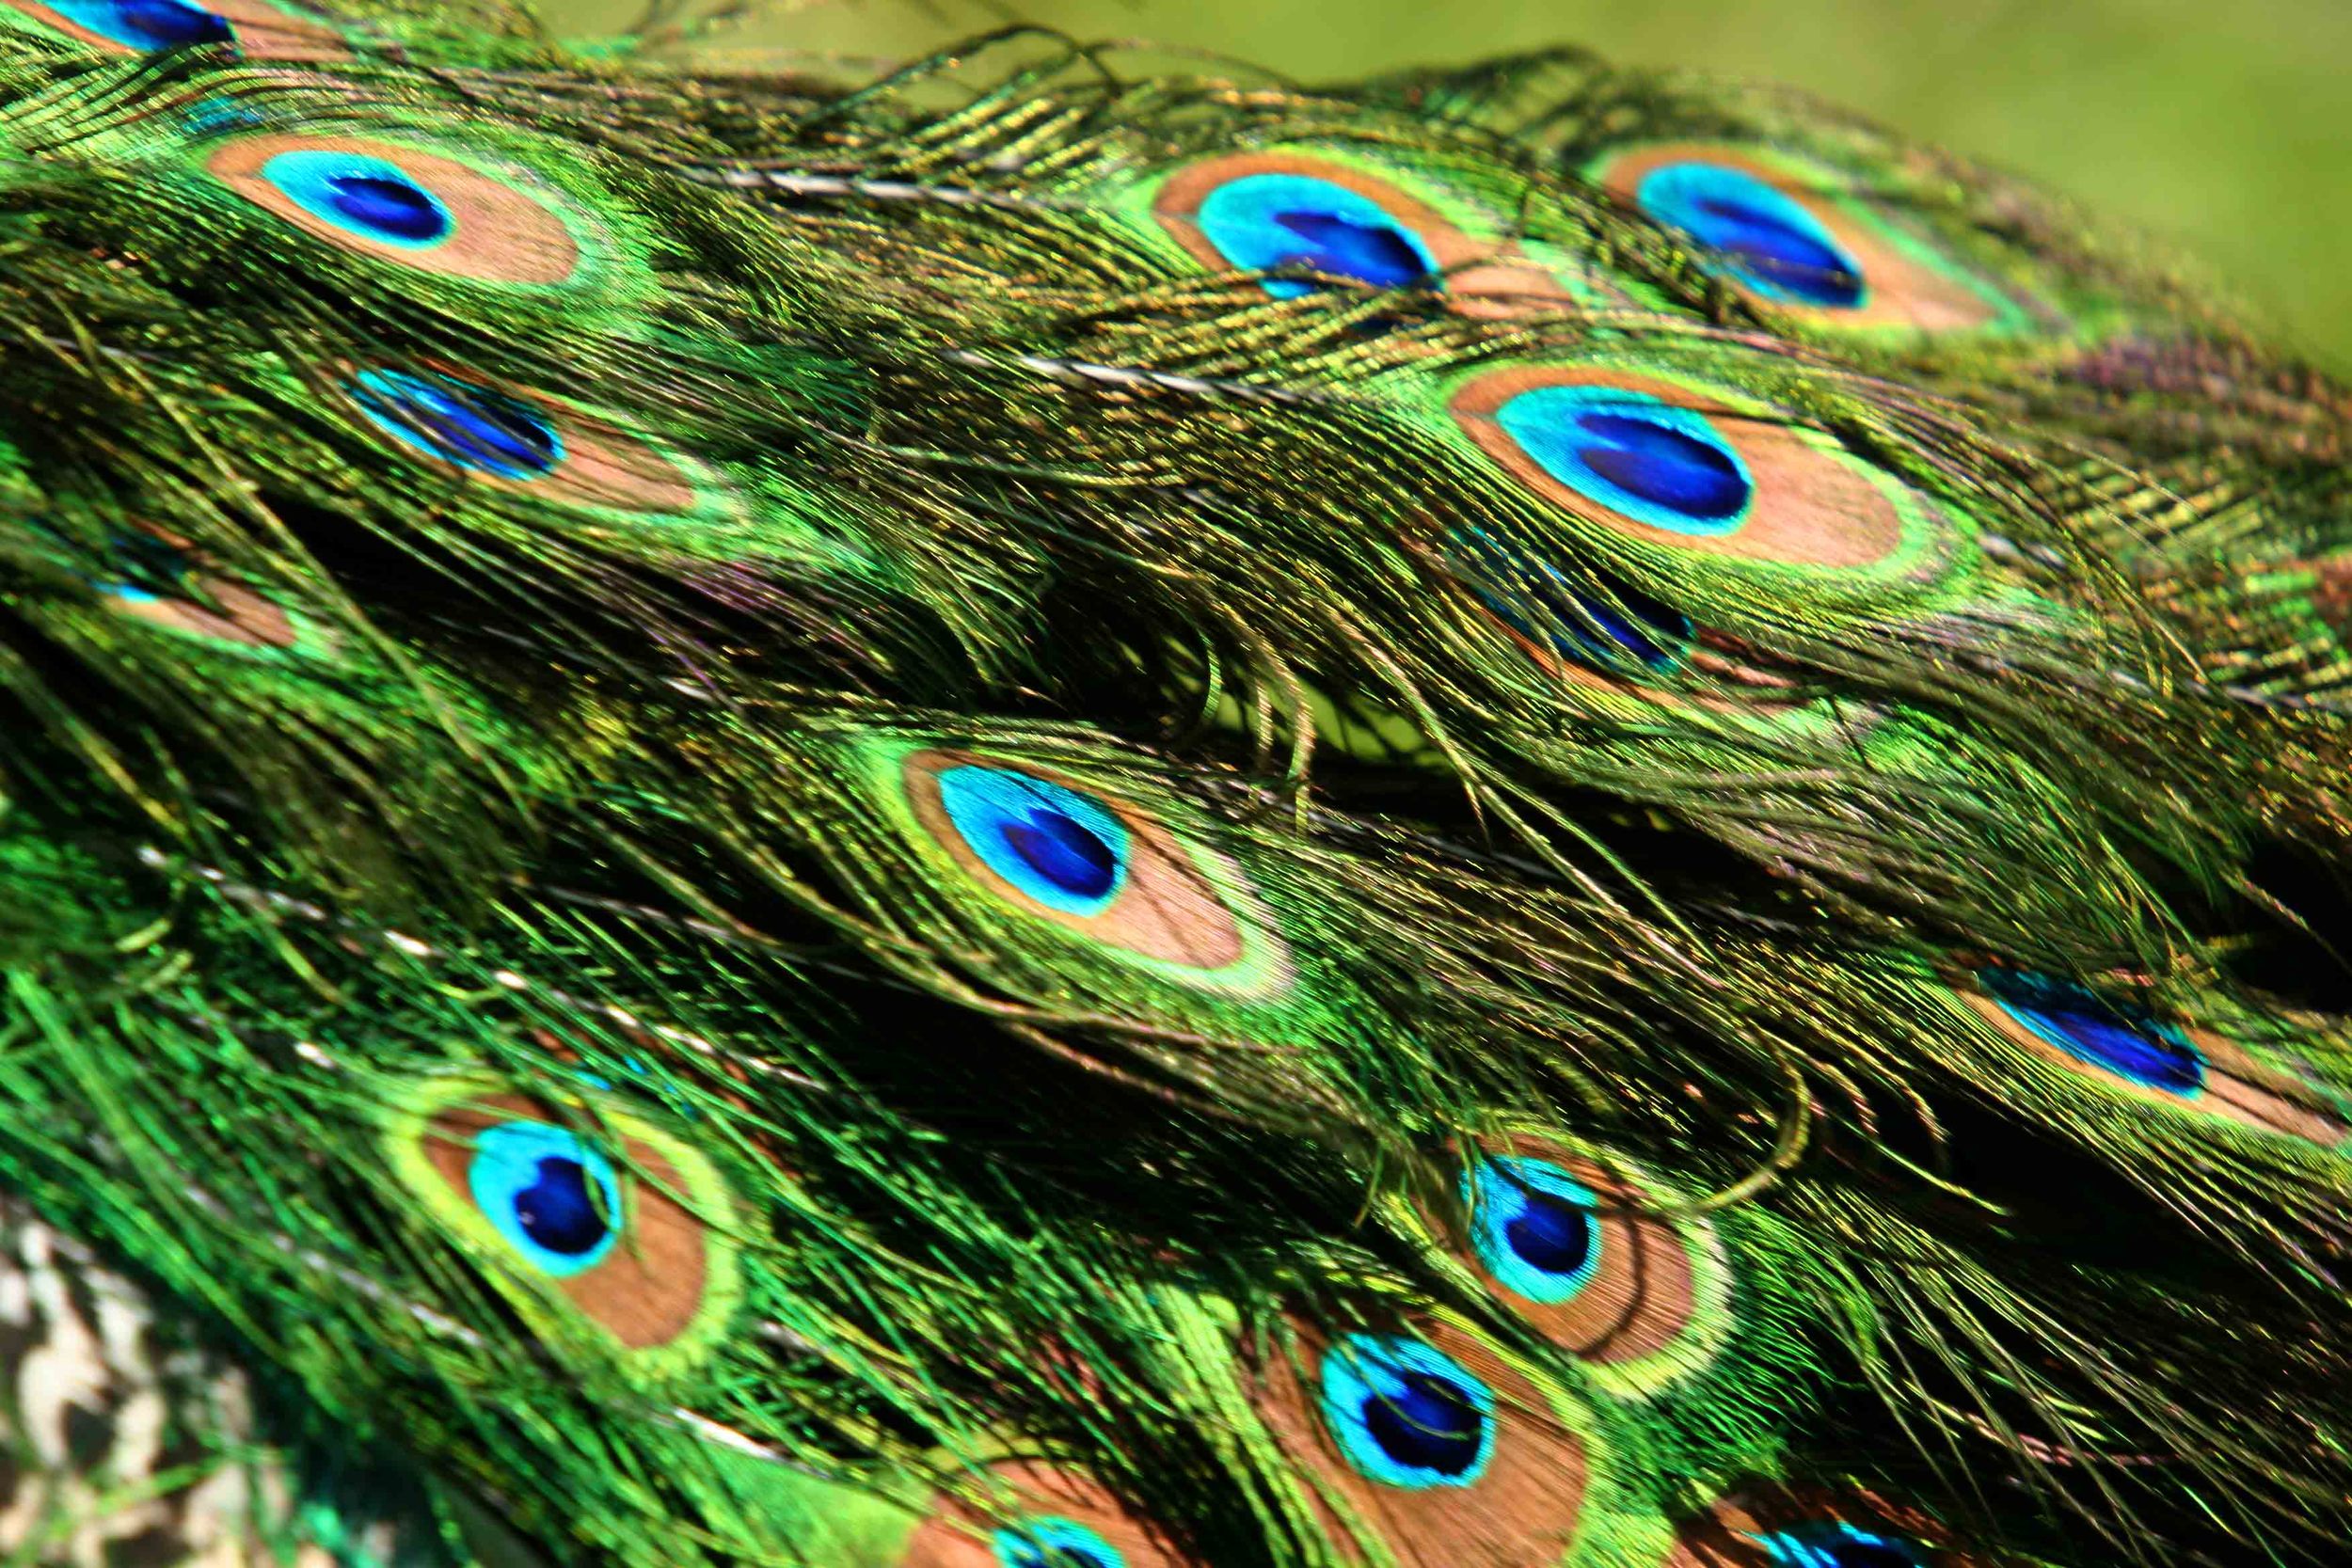 A-Peacock Feathers 2.jpg